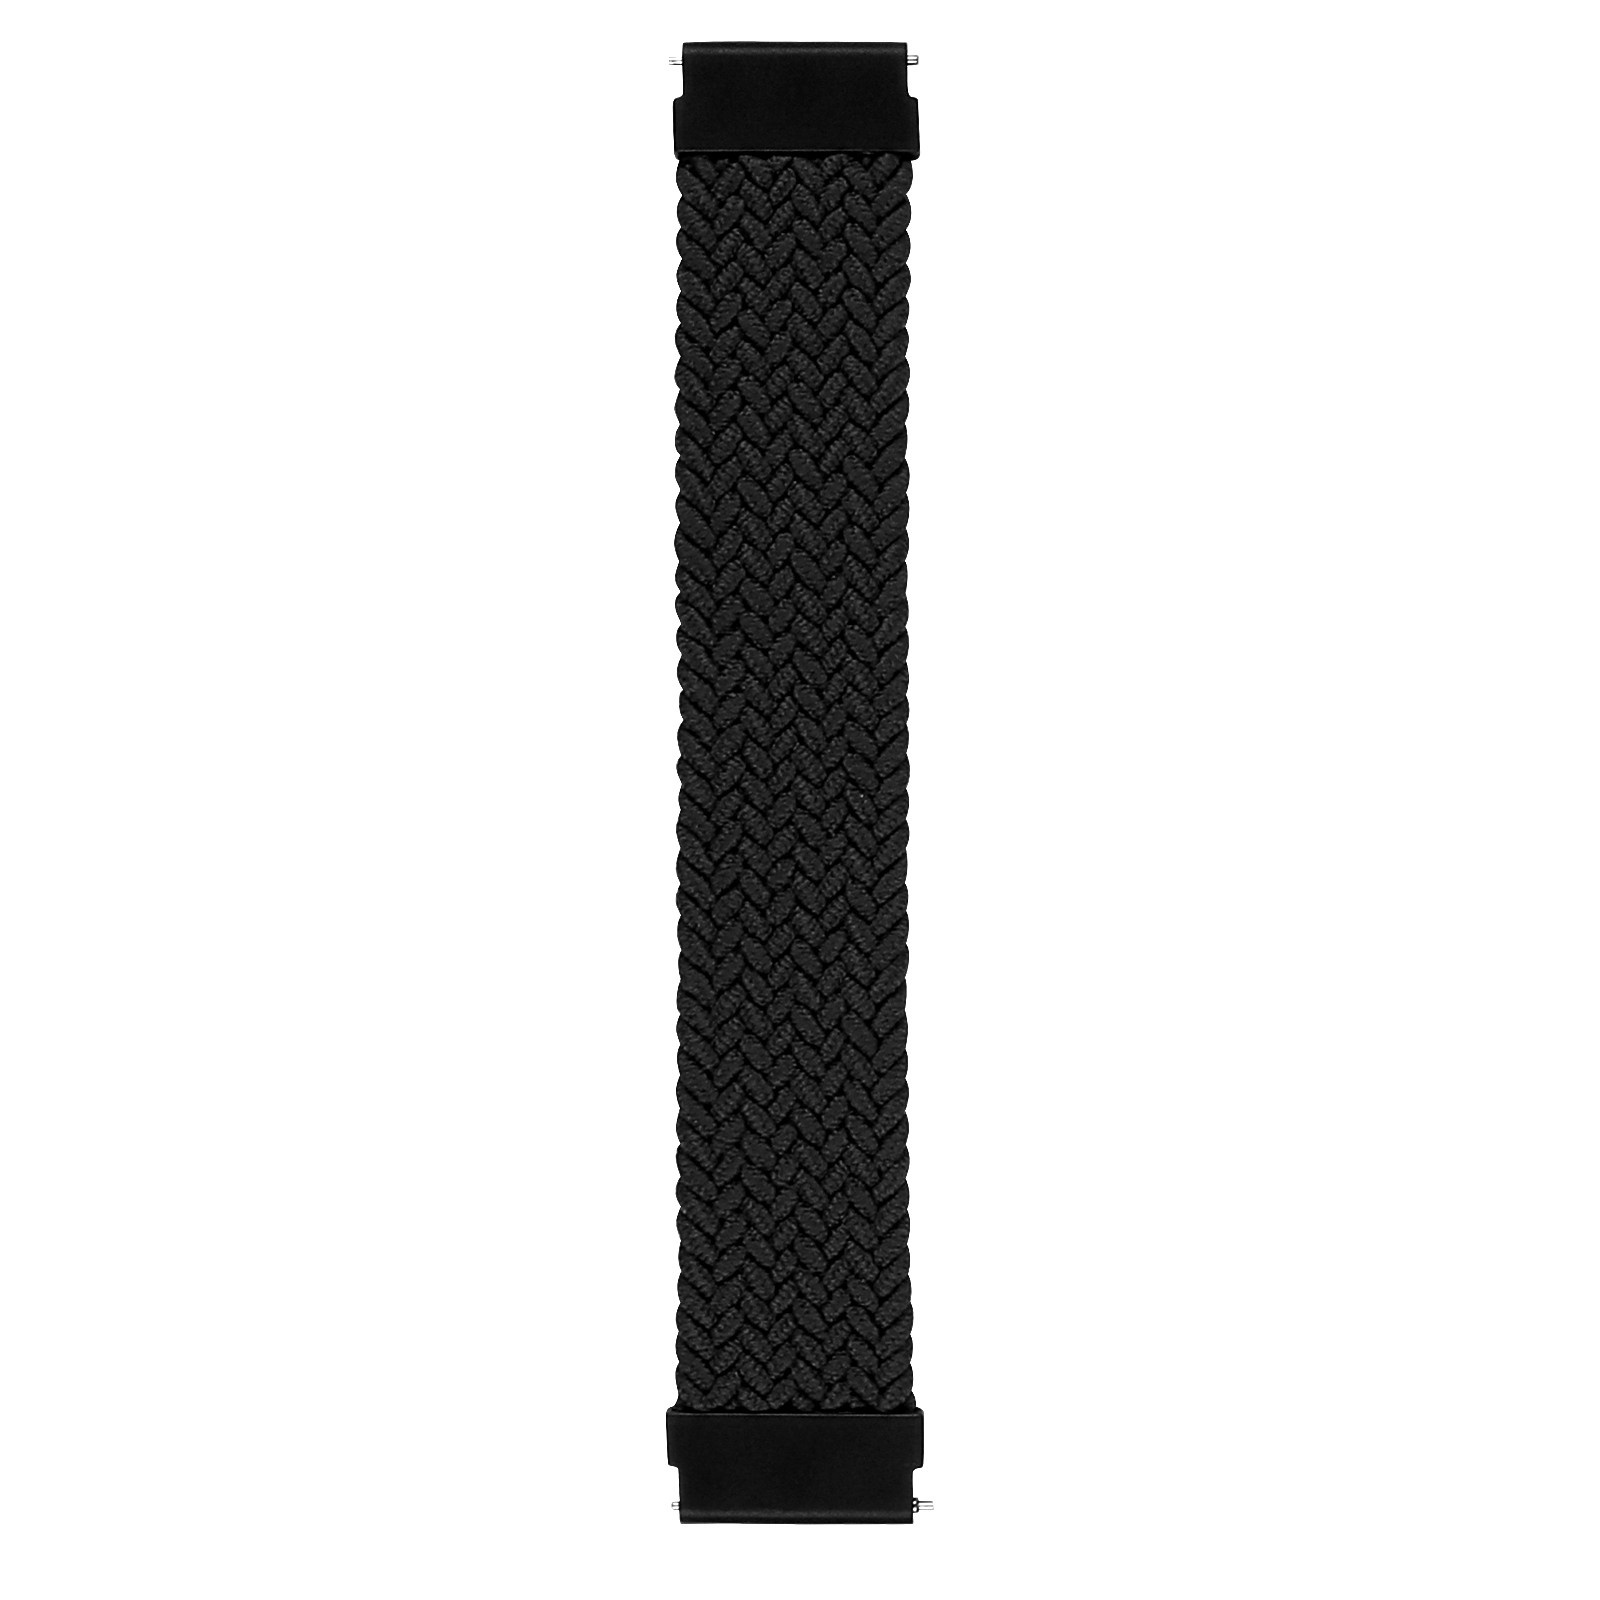 Huawei Watch Gt Nylon Braided Solo Strap - Black